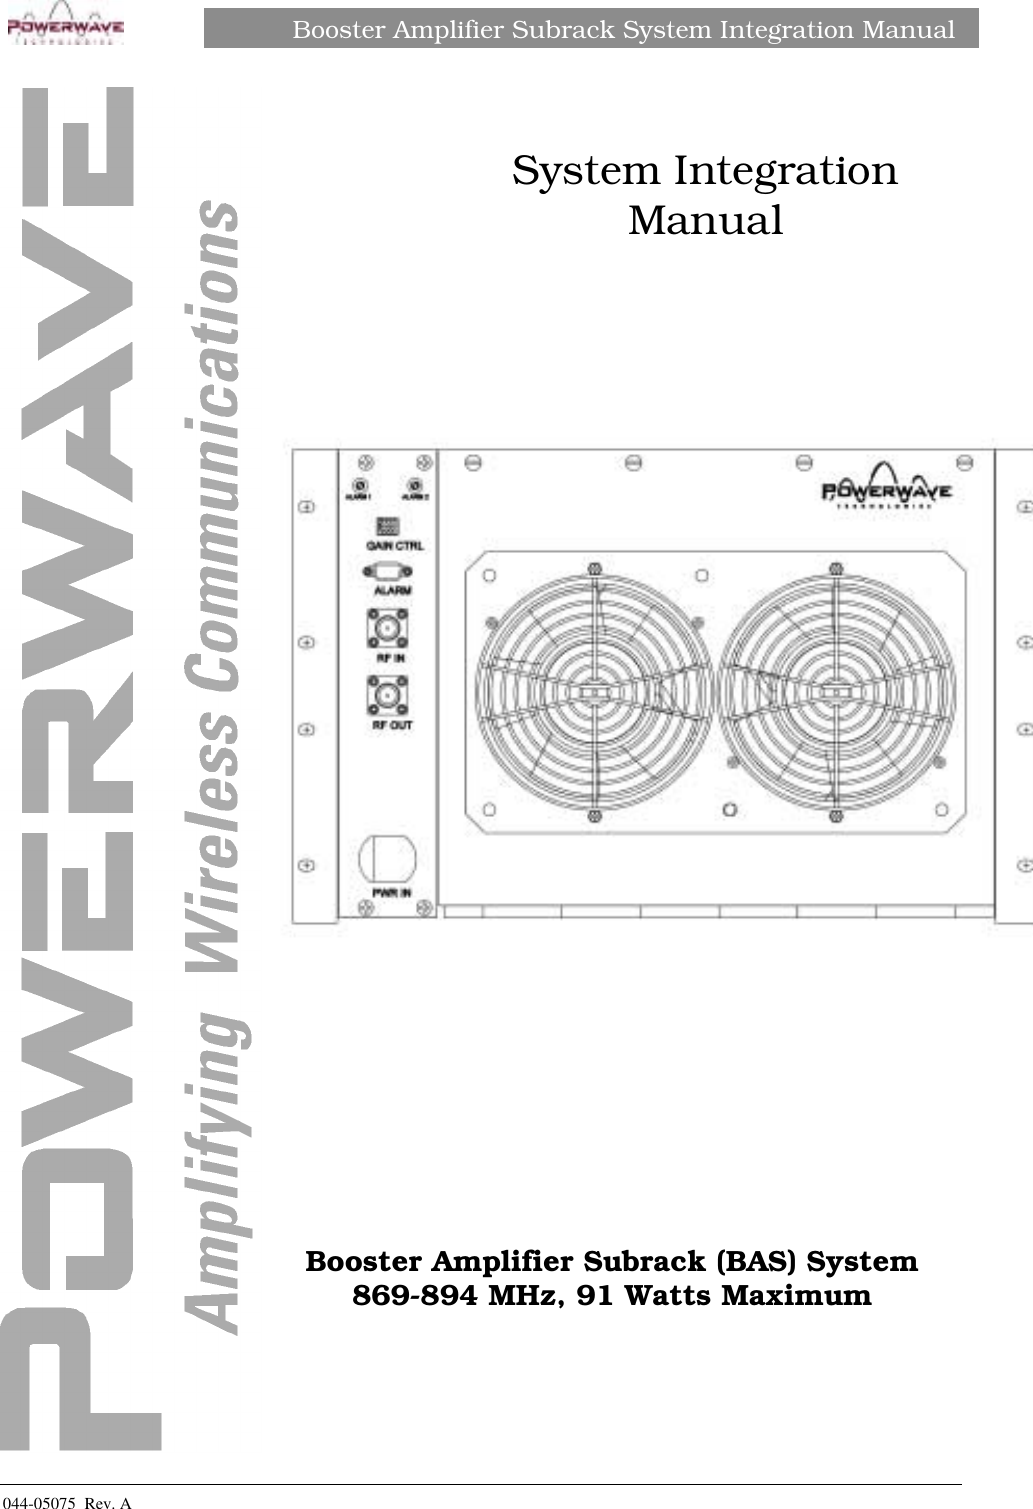 Booster Amplifier Subrack System Integration Manual044-05075  Rev. ASystem IntegrationManualBooster Amplifier Subrack (BAS) System869-894 MHz, 91 Watts Maximum